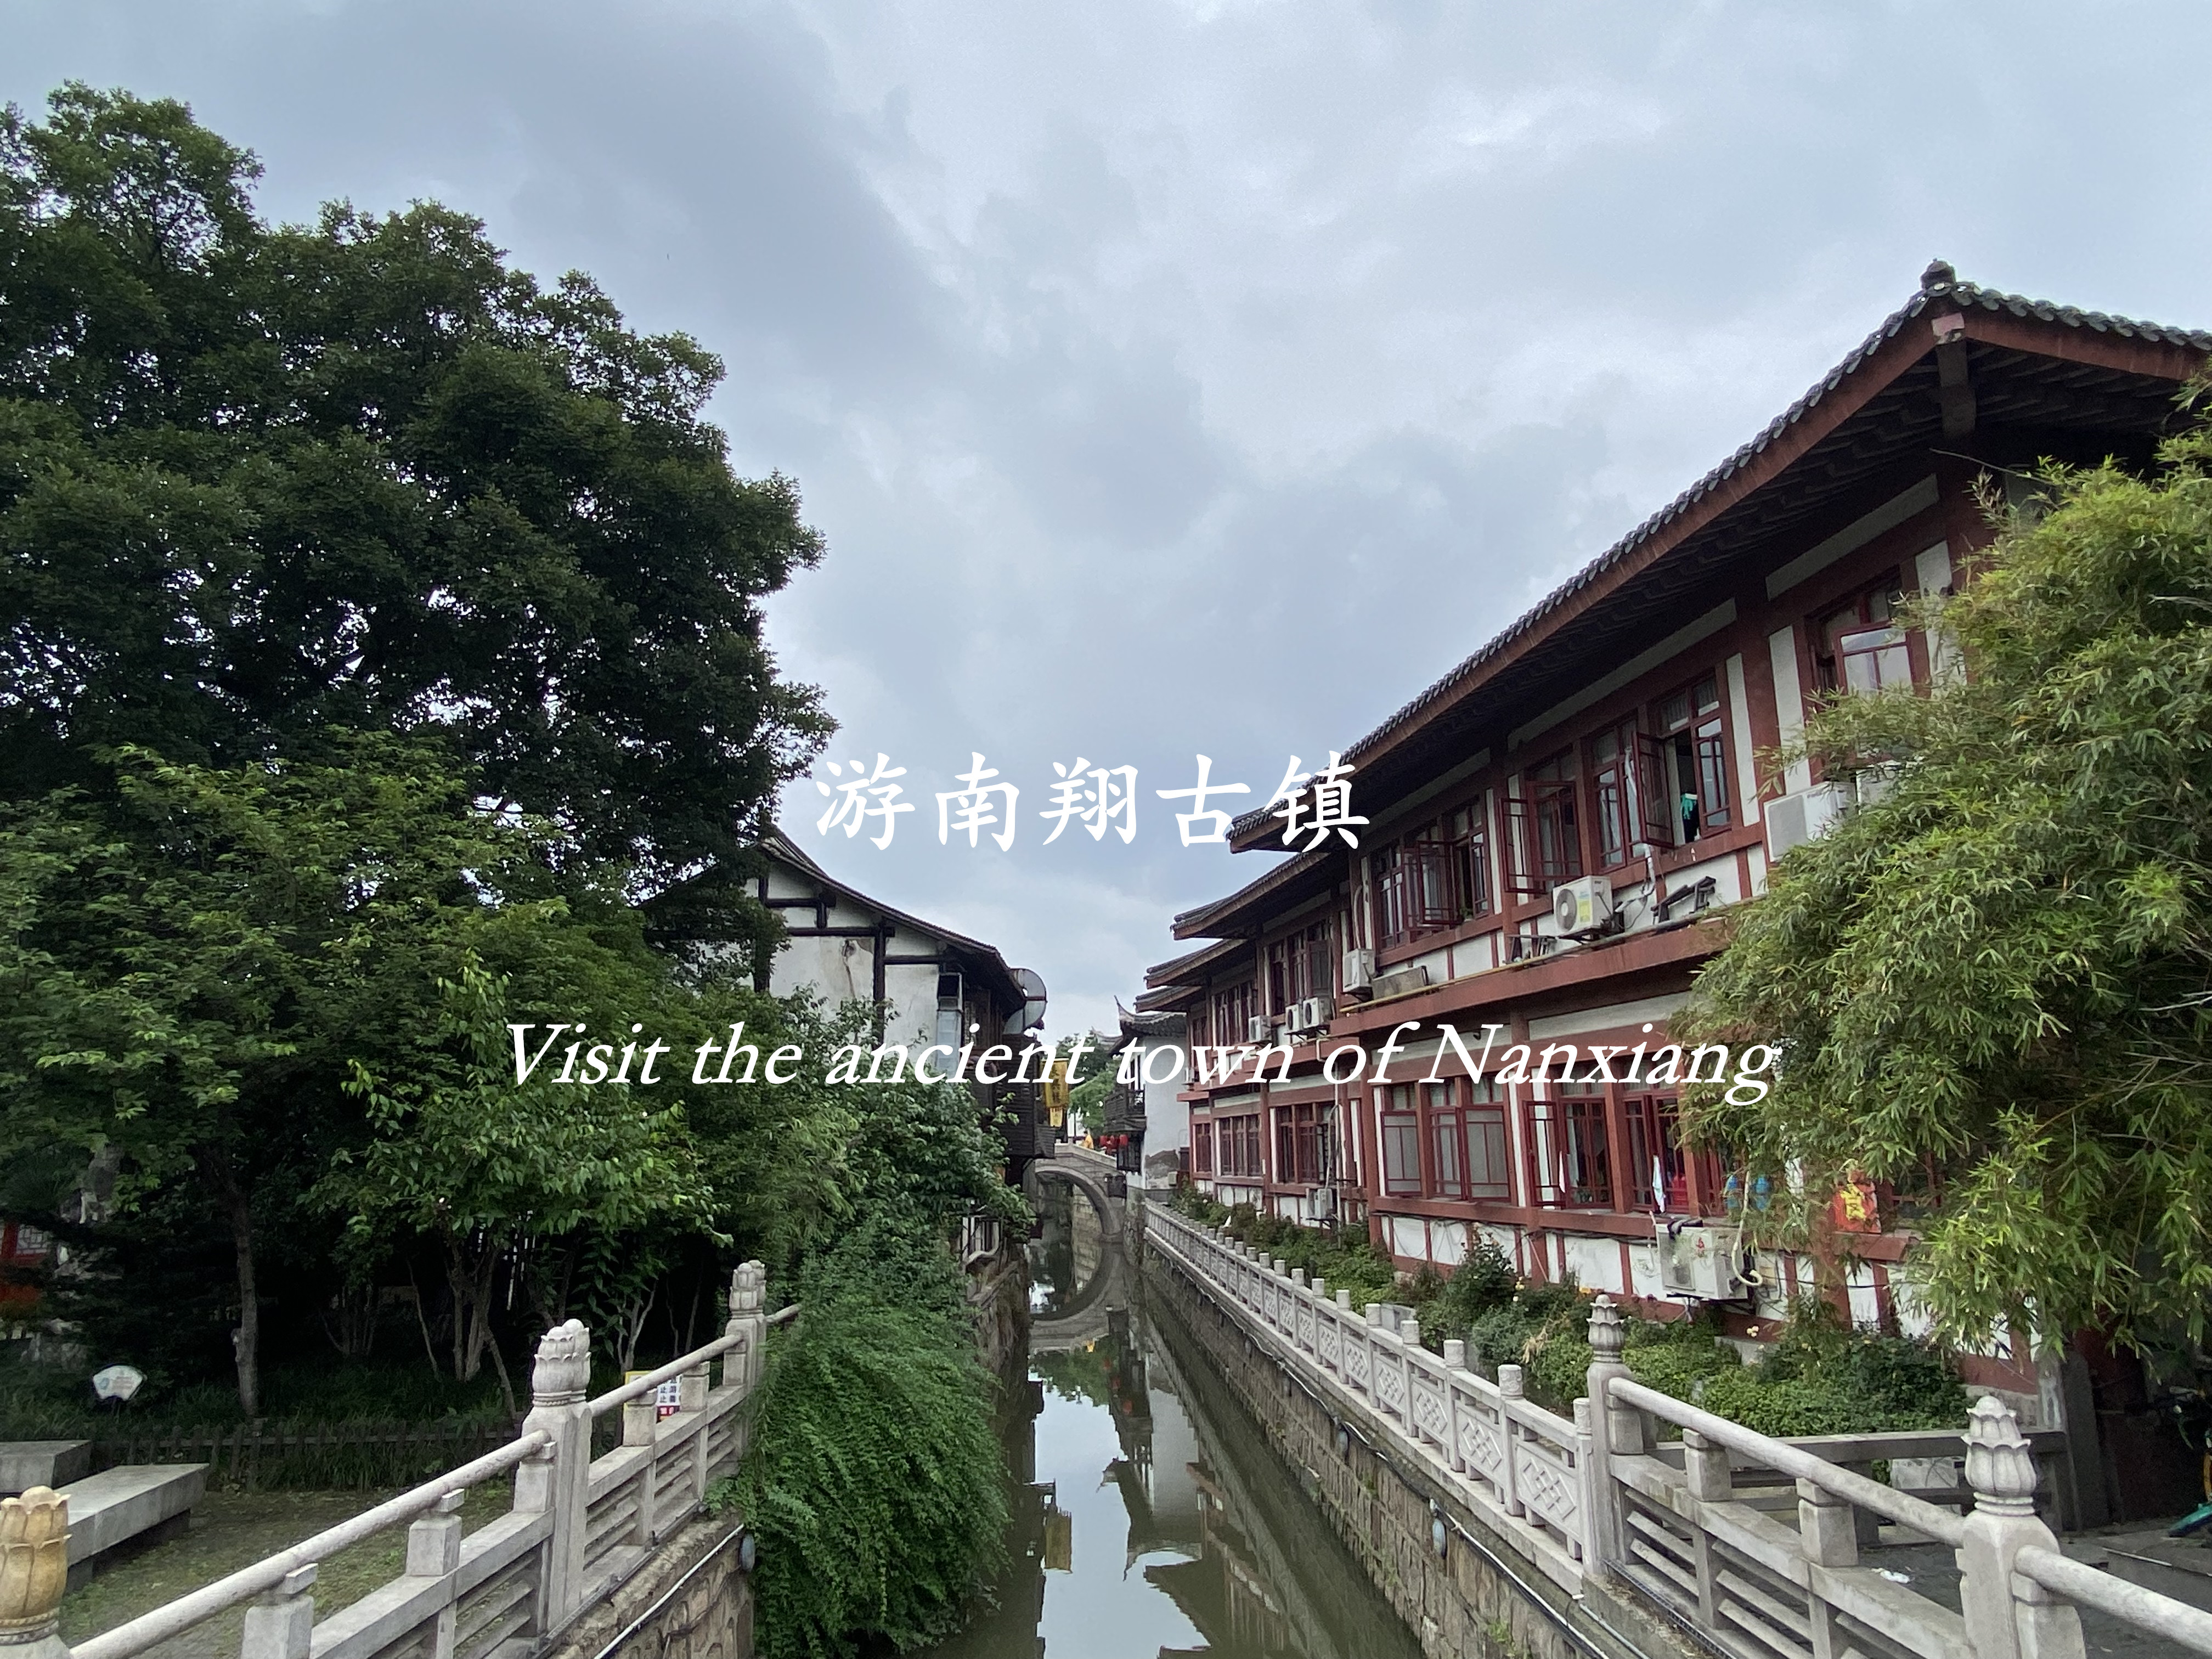 Visit the ancient town of Nanxiang